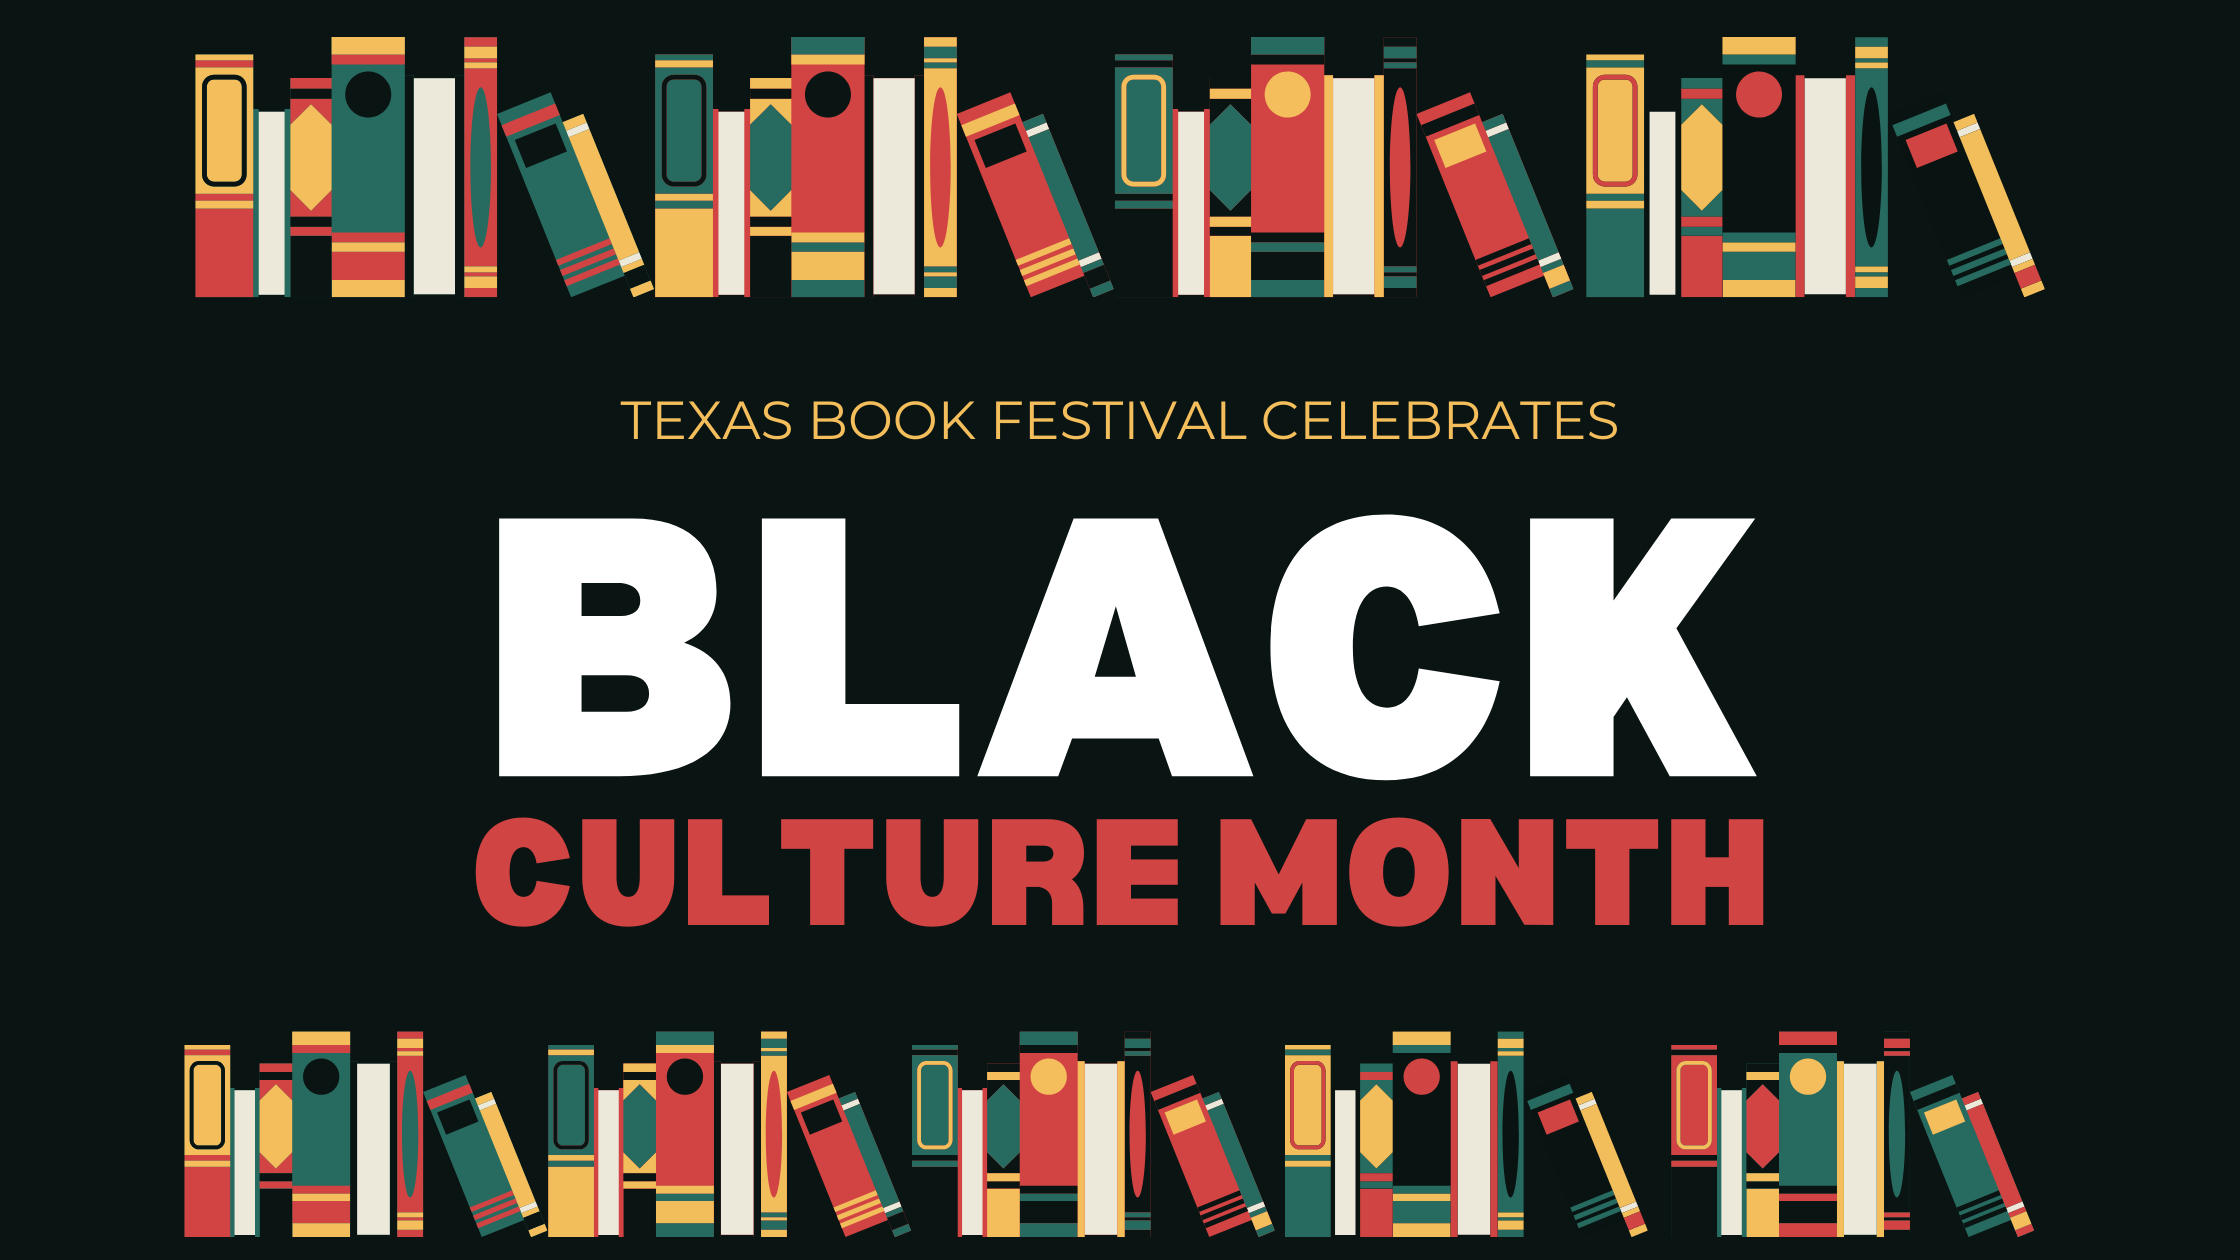 Celebrating Black Culture Month